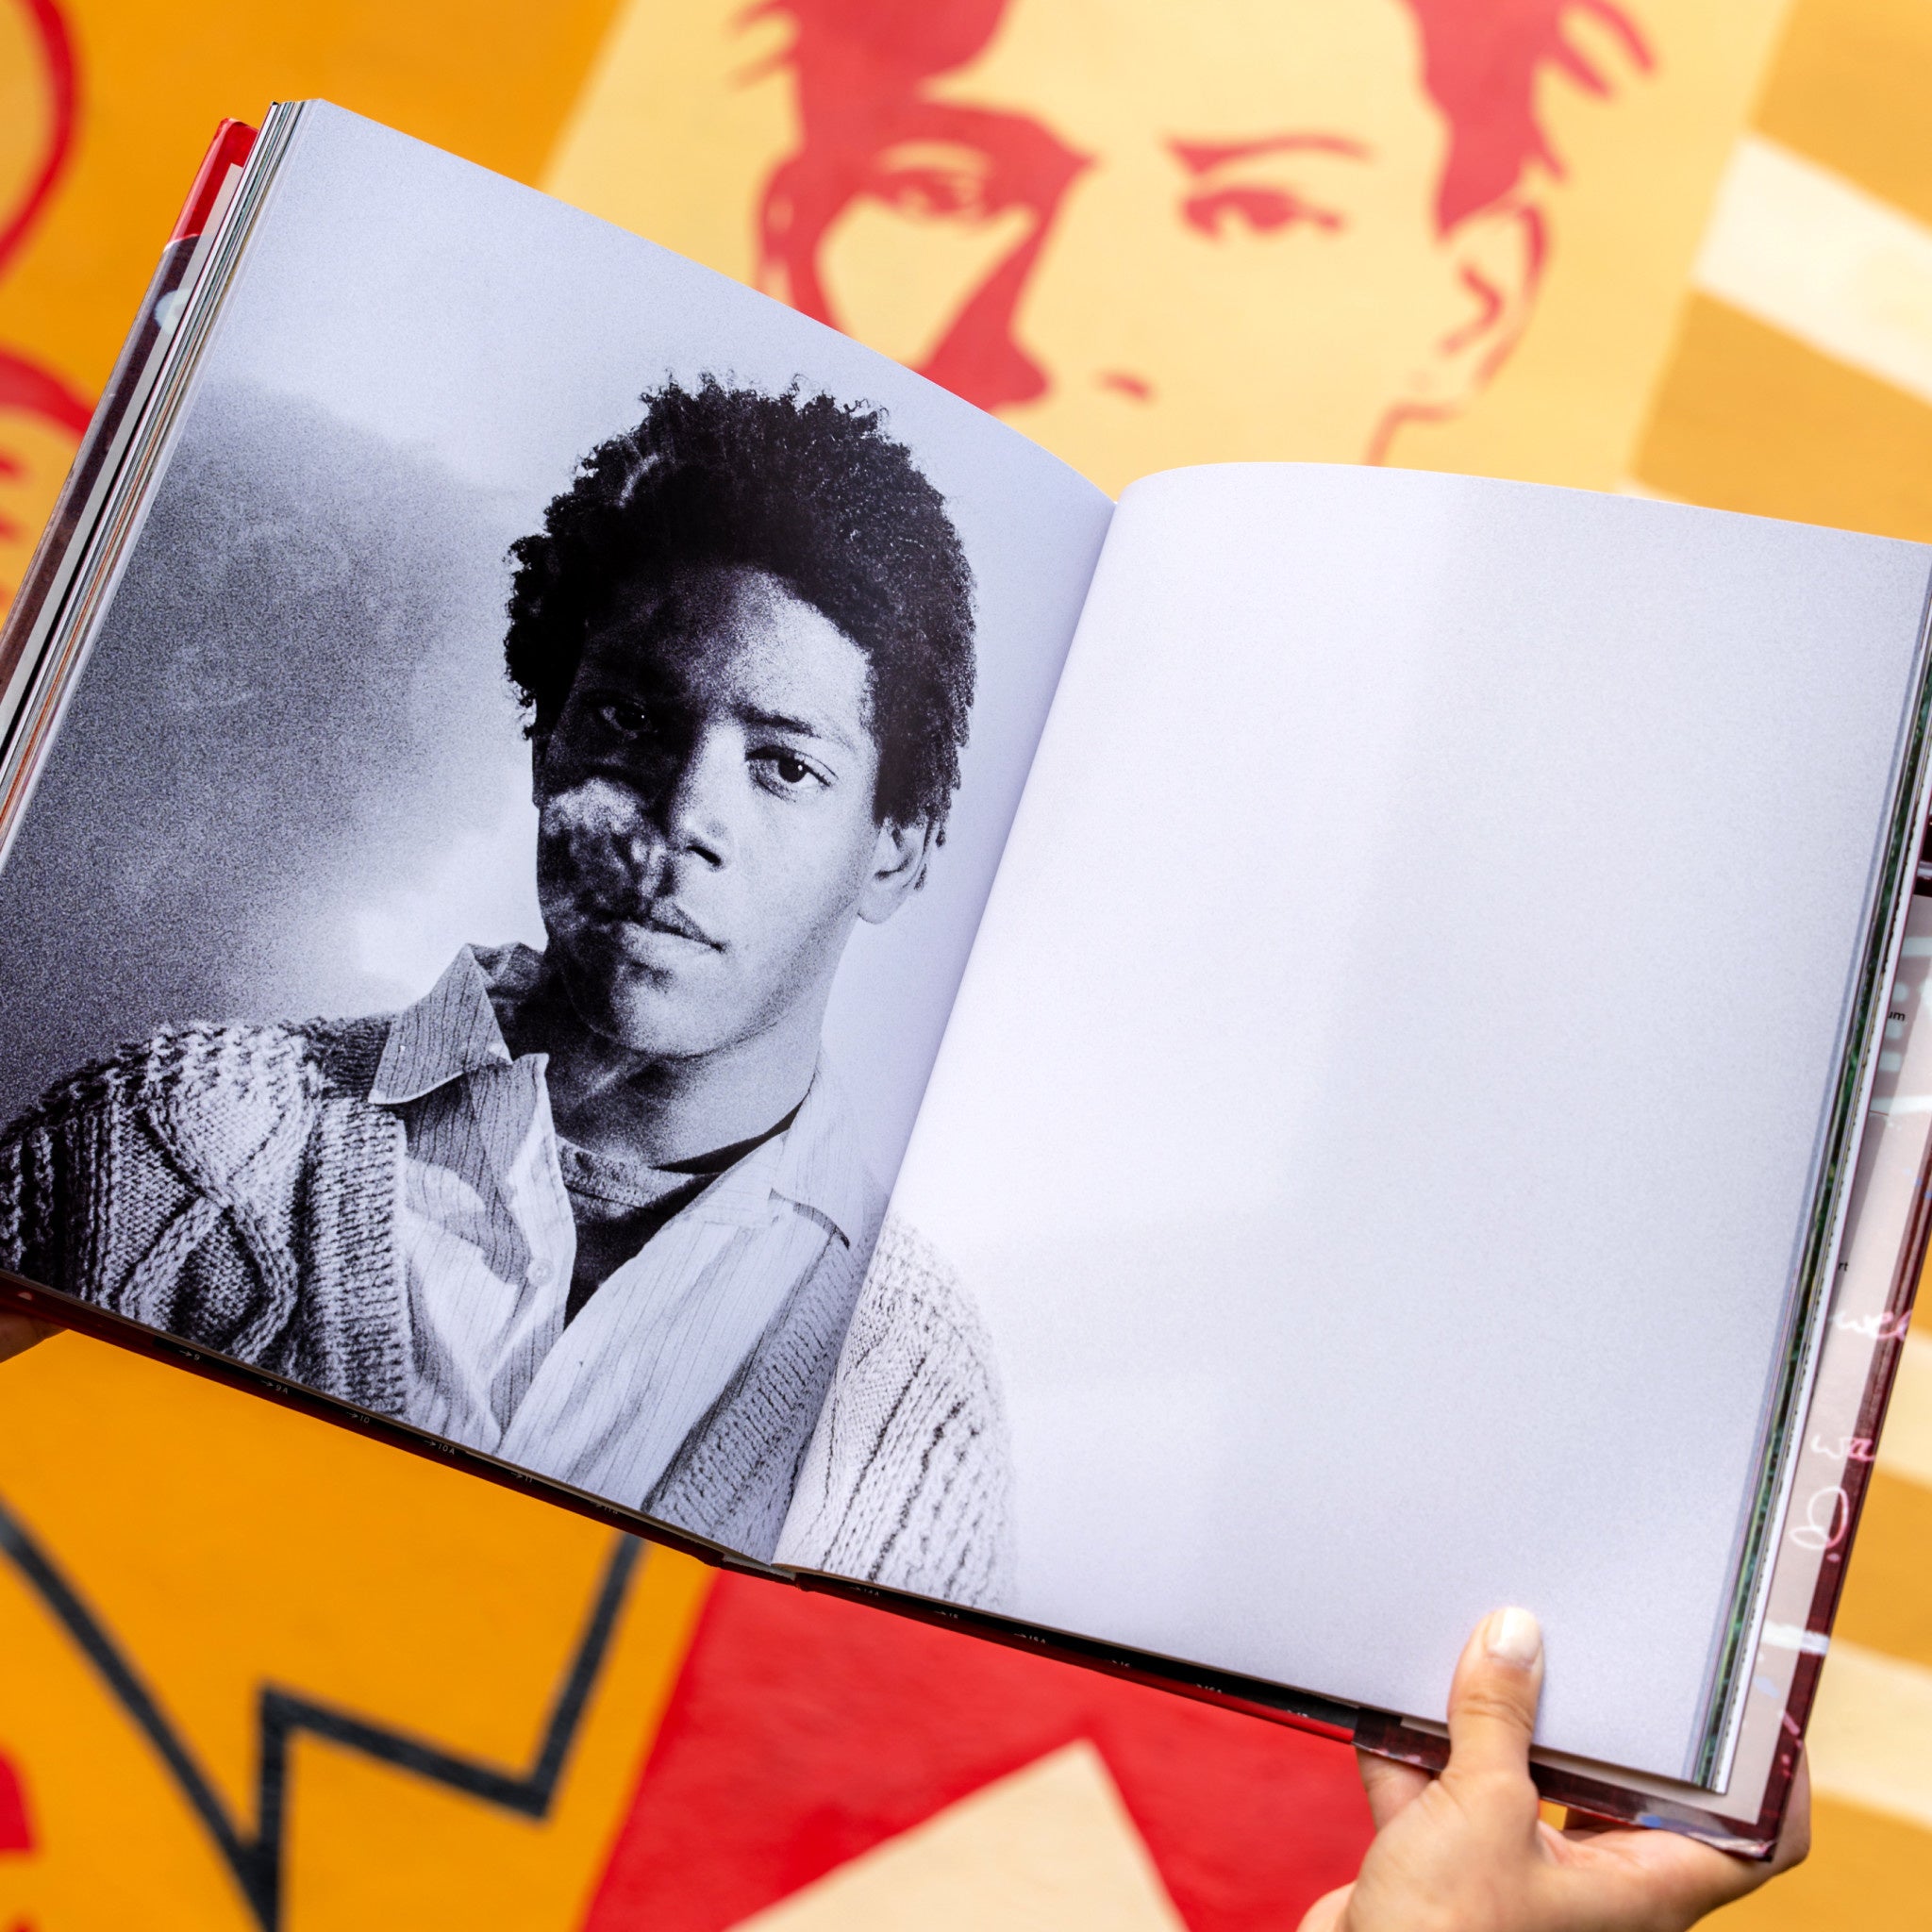 Jean-Michel Basquiat: Crossroads - Wynwood Walls Shop